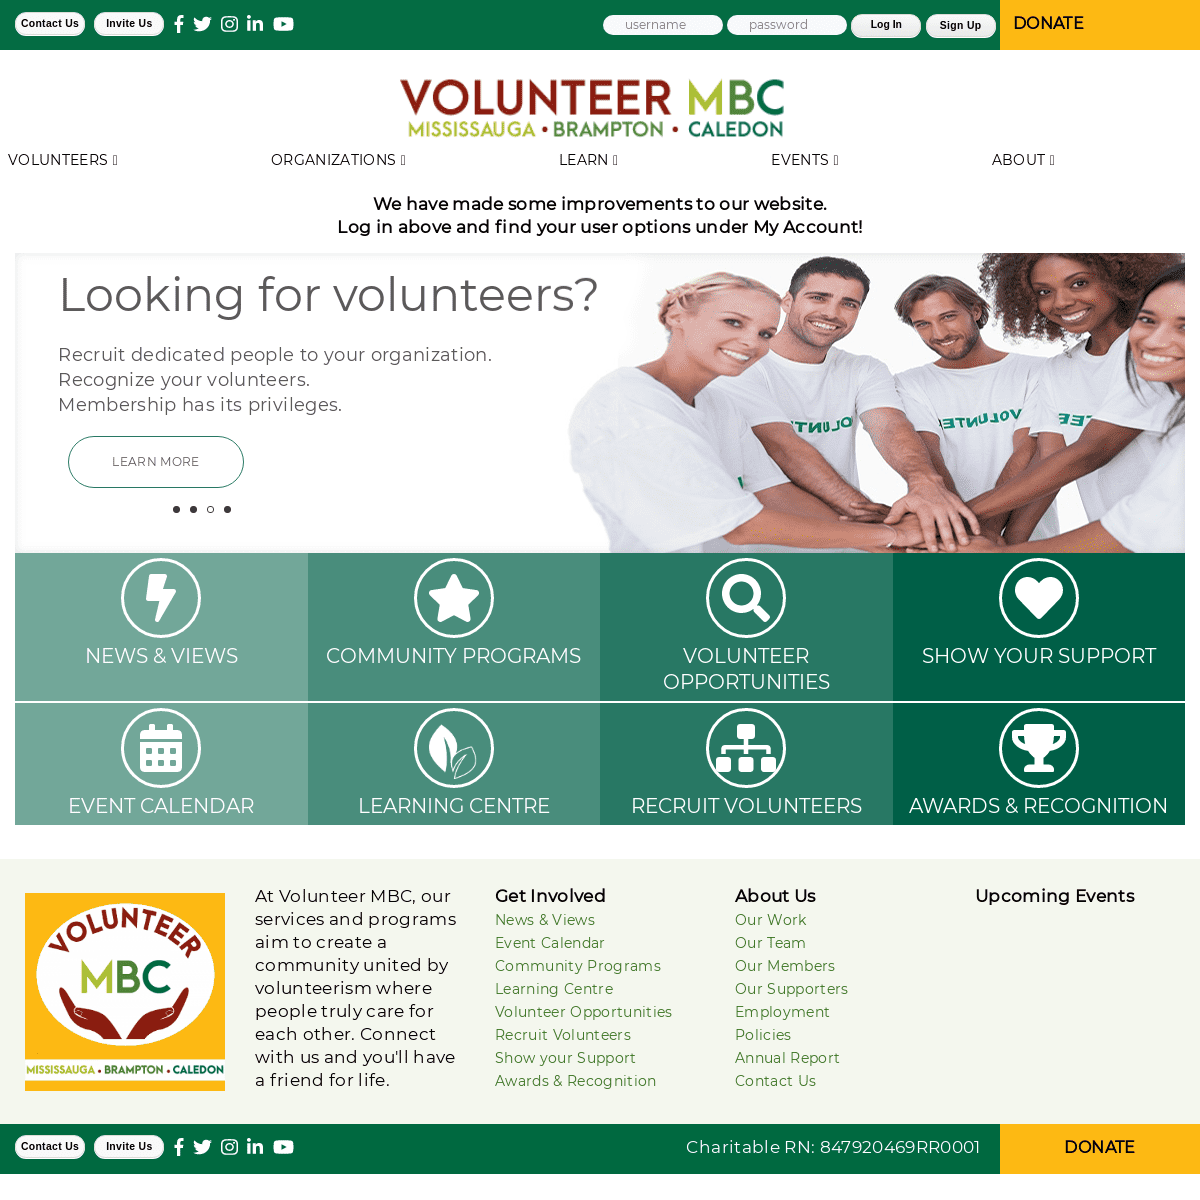 Volunteer MBC